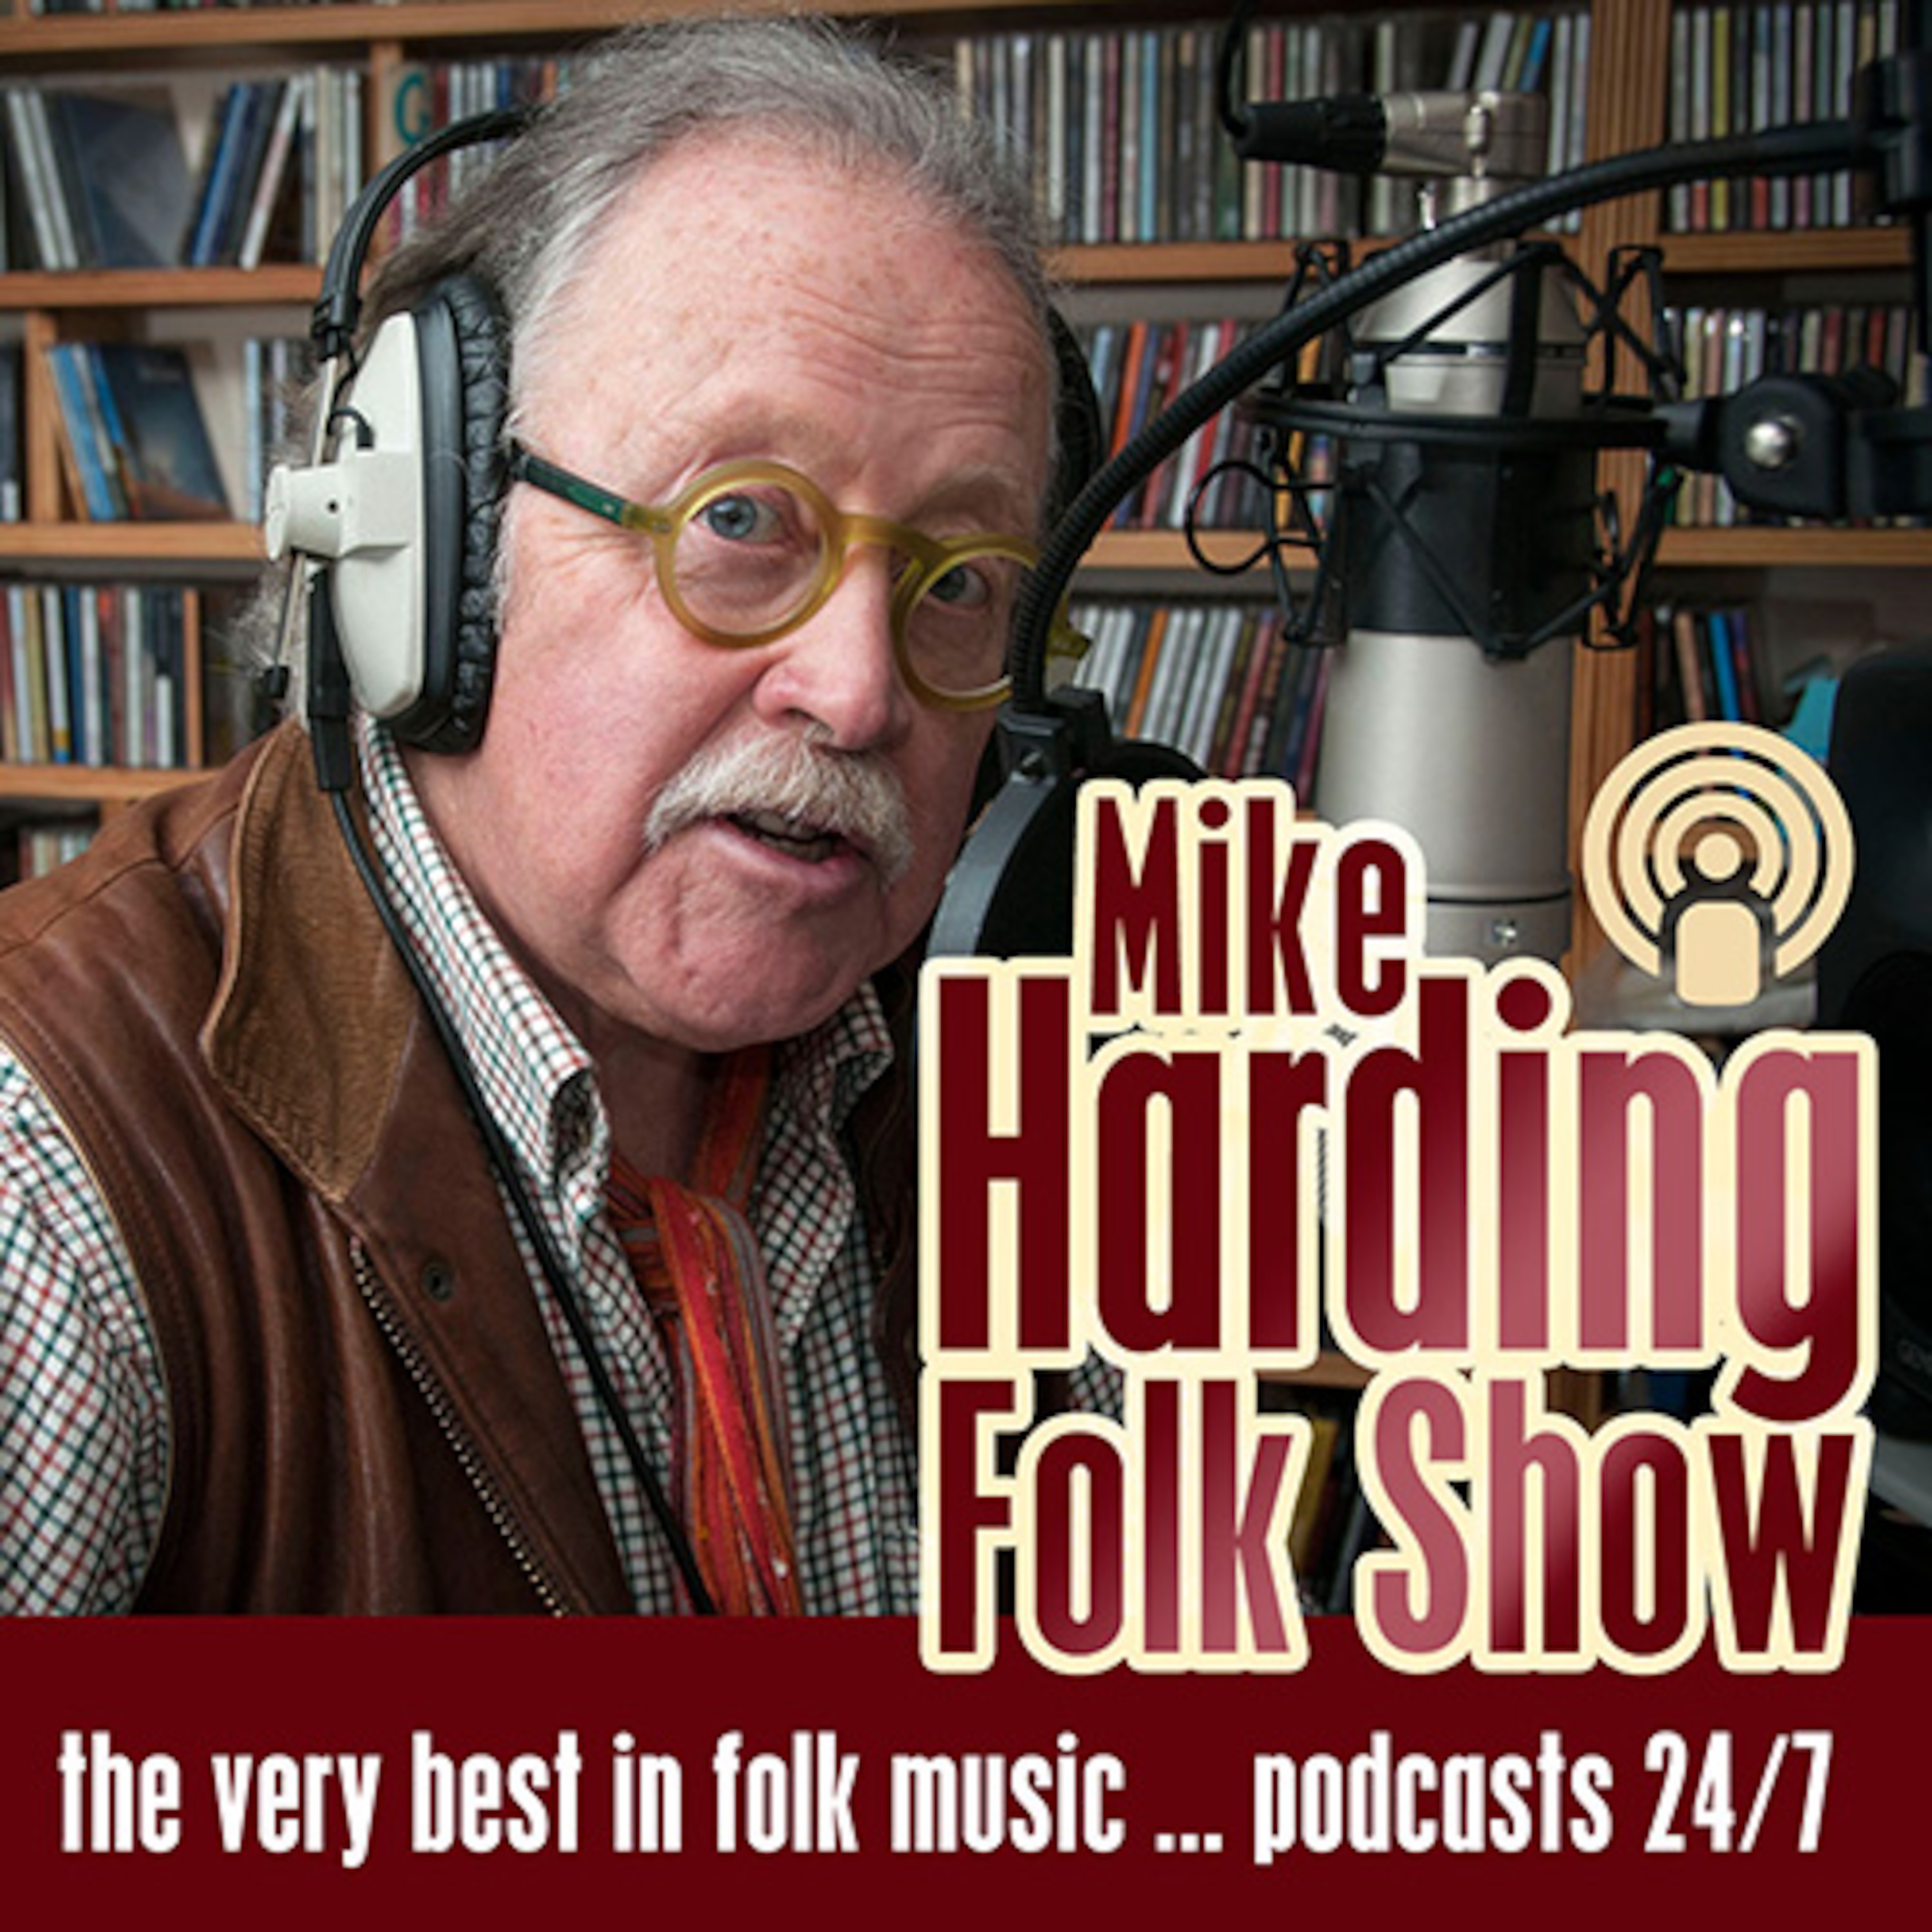 Mike Harding Folk Show 135